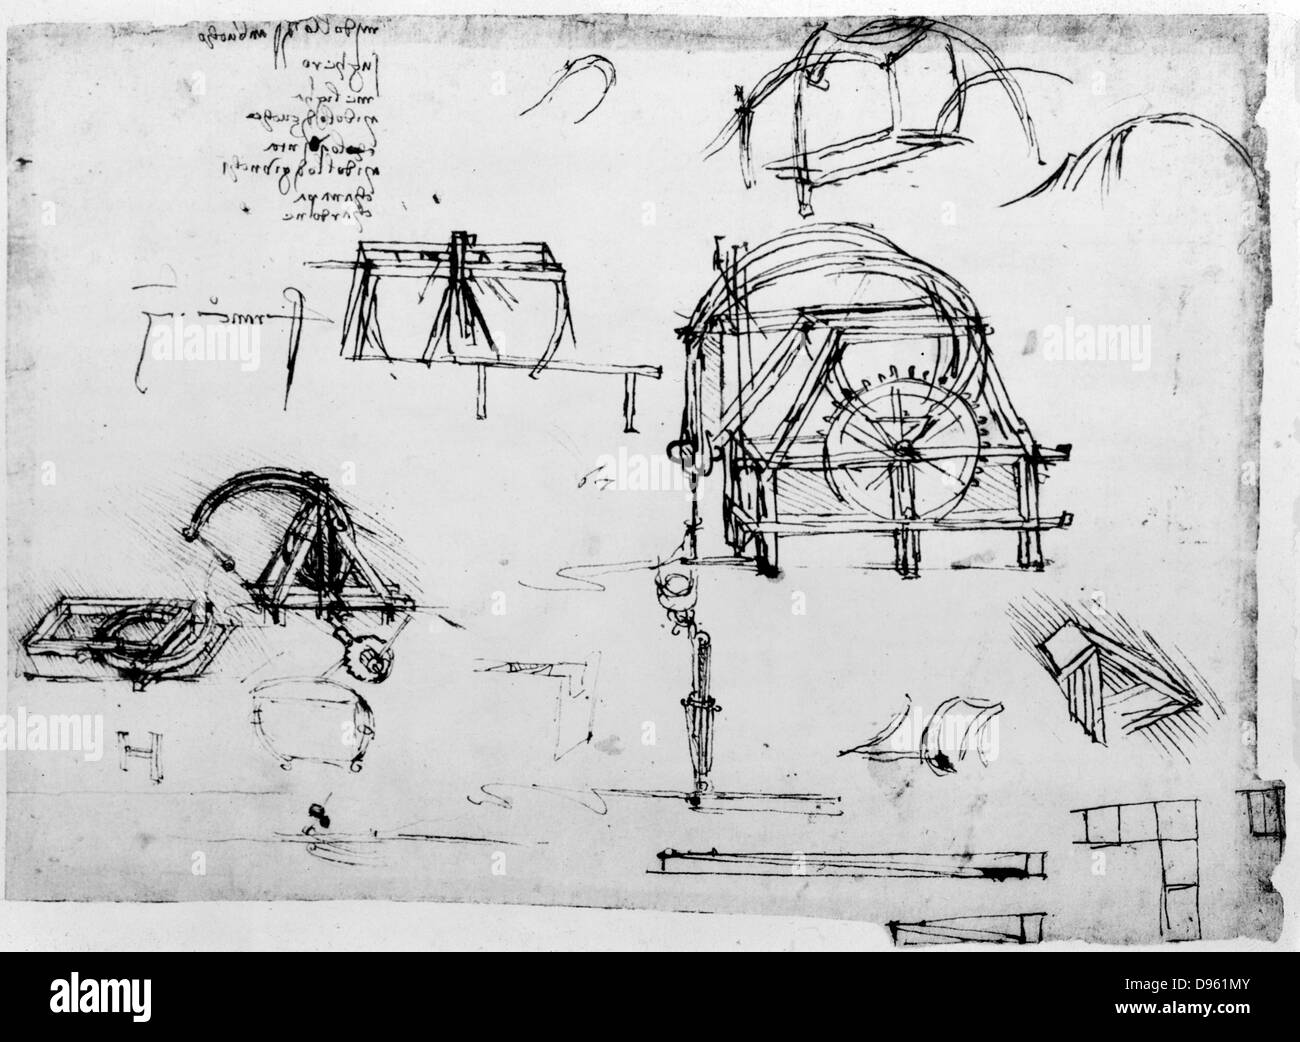 Skizze von Leonardo da Vinci (1452-1519) für ein Perpetuum mobile-Gerät. Biblioteca Ambrosiana, Milan. Stockfoto